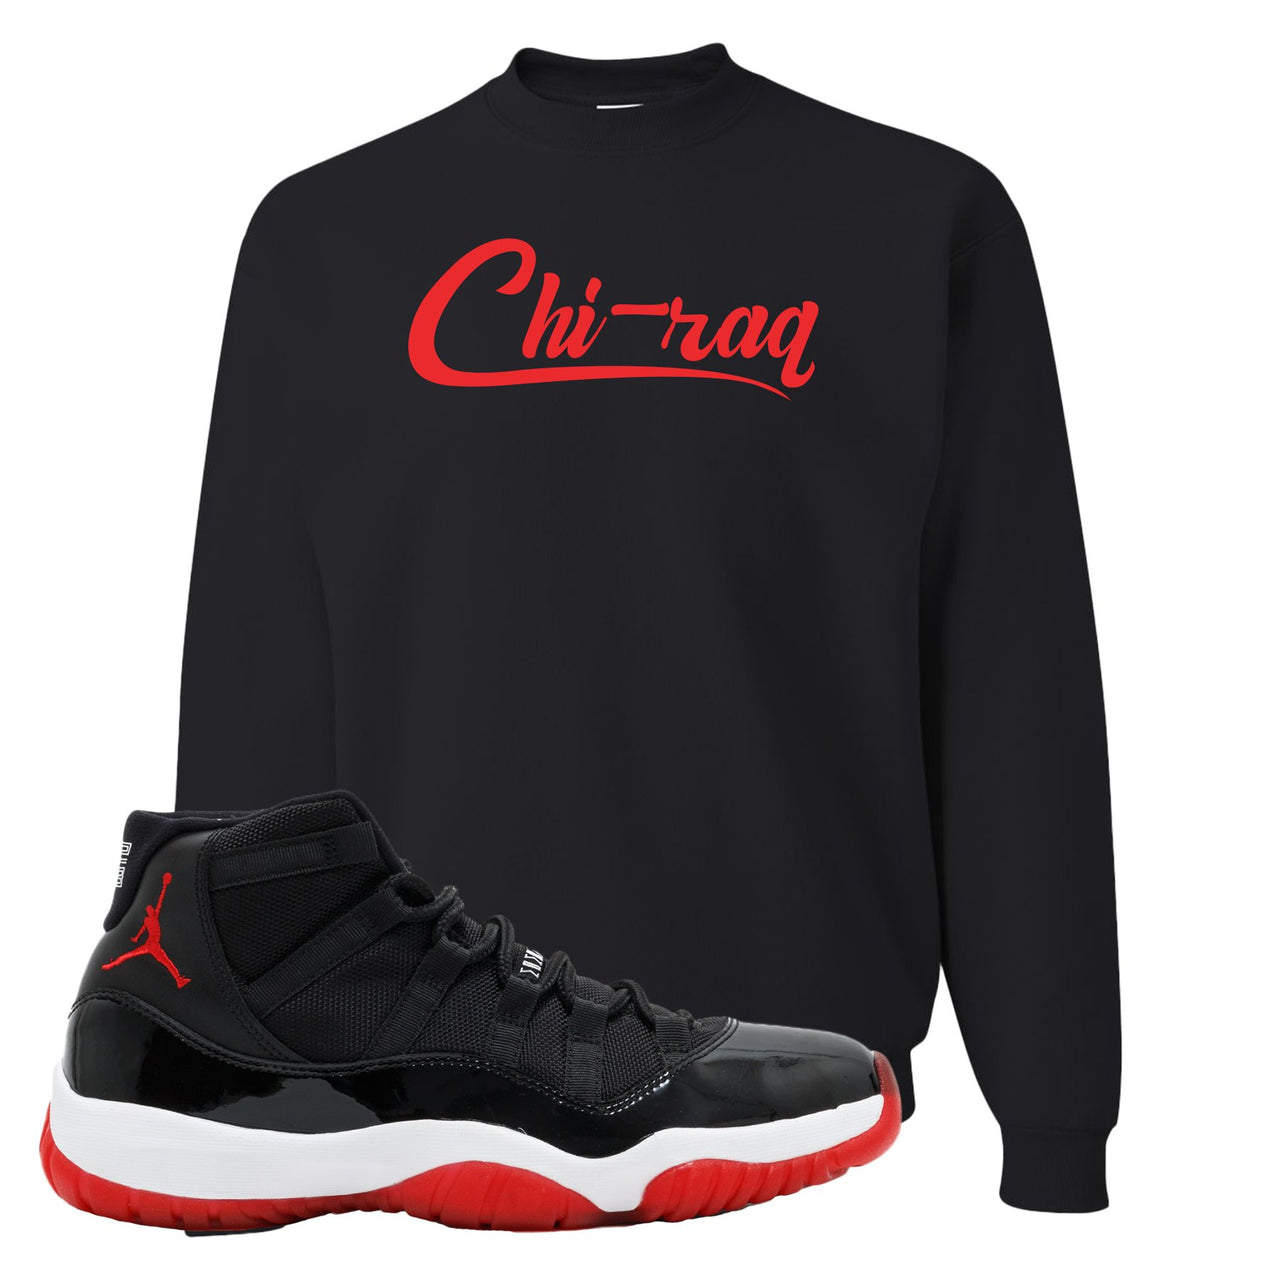 Jordan 11 Bred Chi-raq Black Sneaker Hook Up Crewneck Sweatshirt